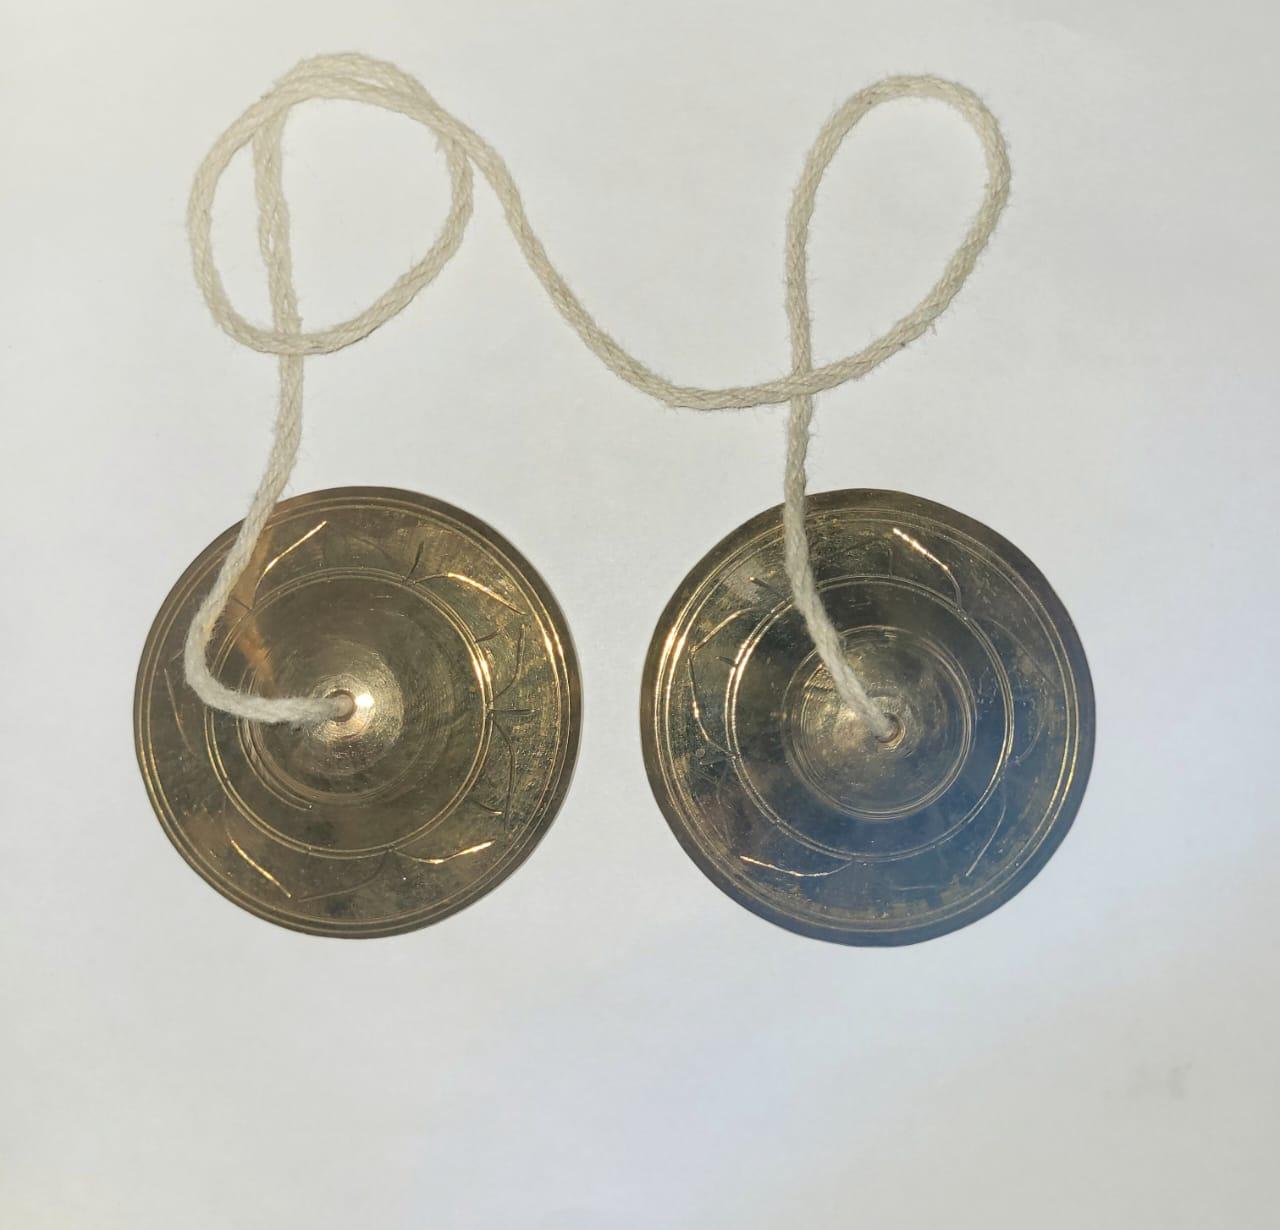 Караталы- ударнный инструмент,бронза,диаметр 6 см